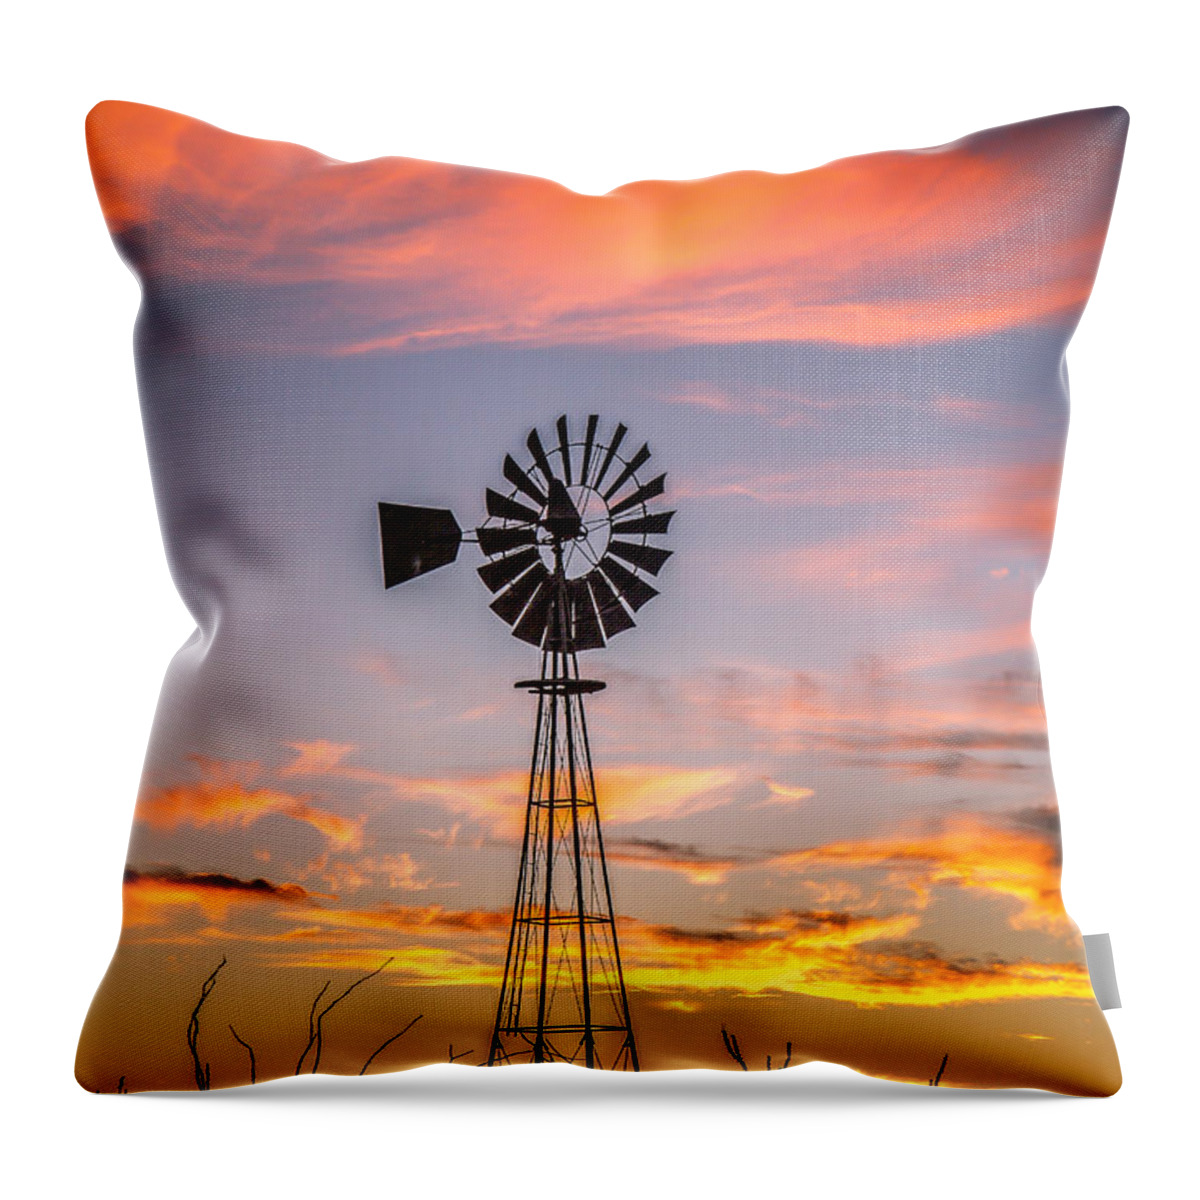 Desert Throw Pillow featuring the photograph Southwest Windmill by Robert Bales